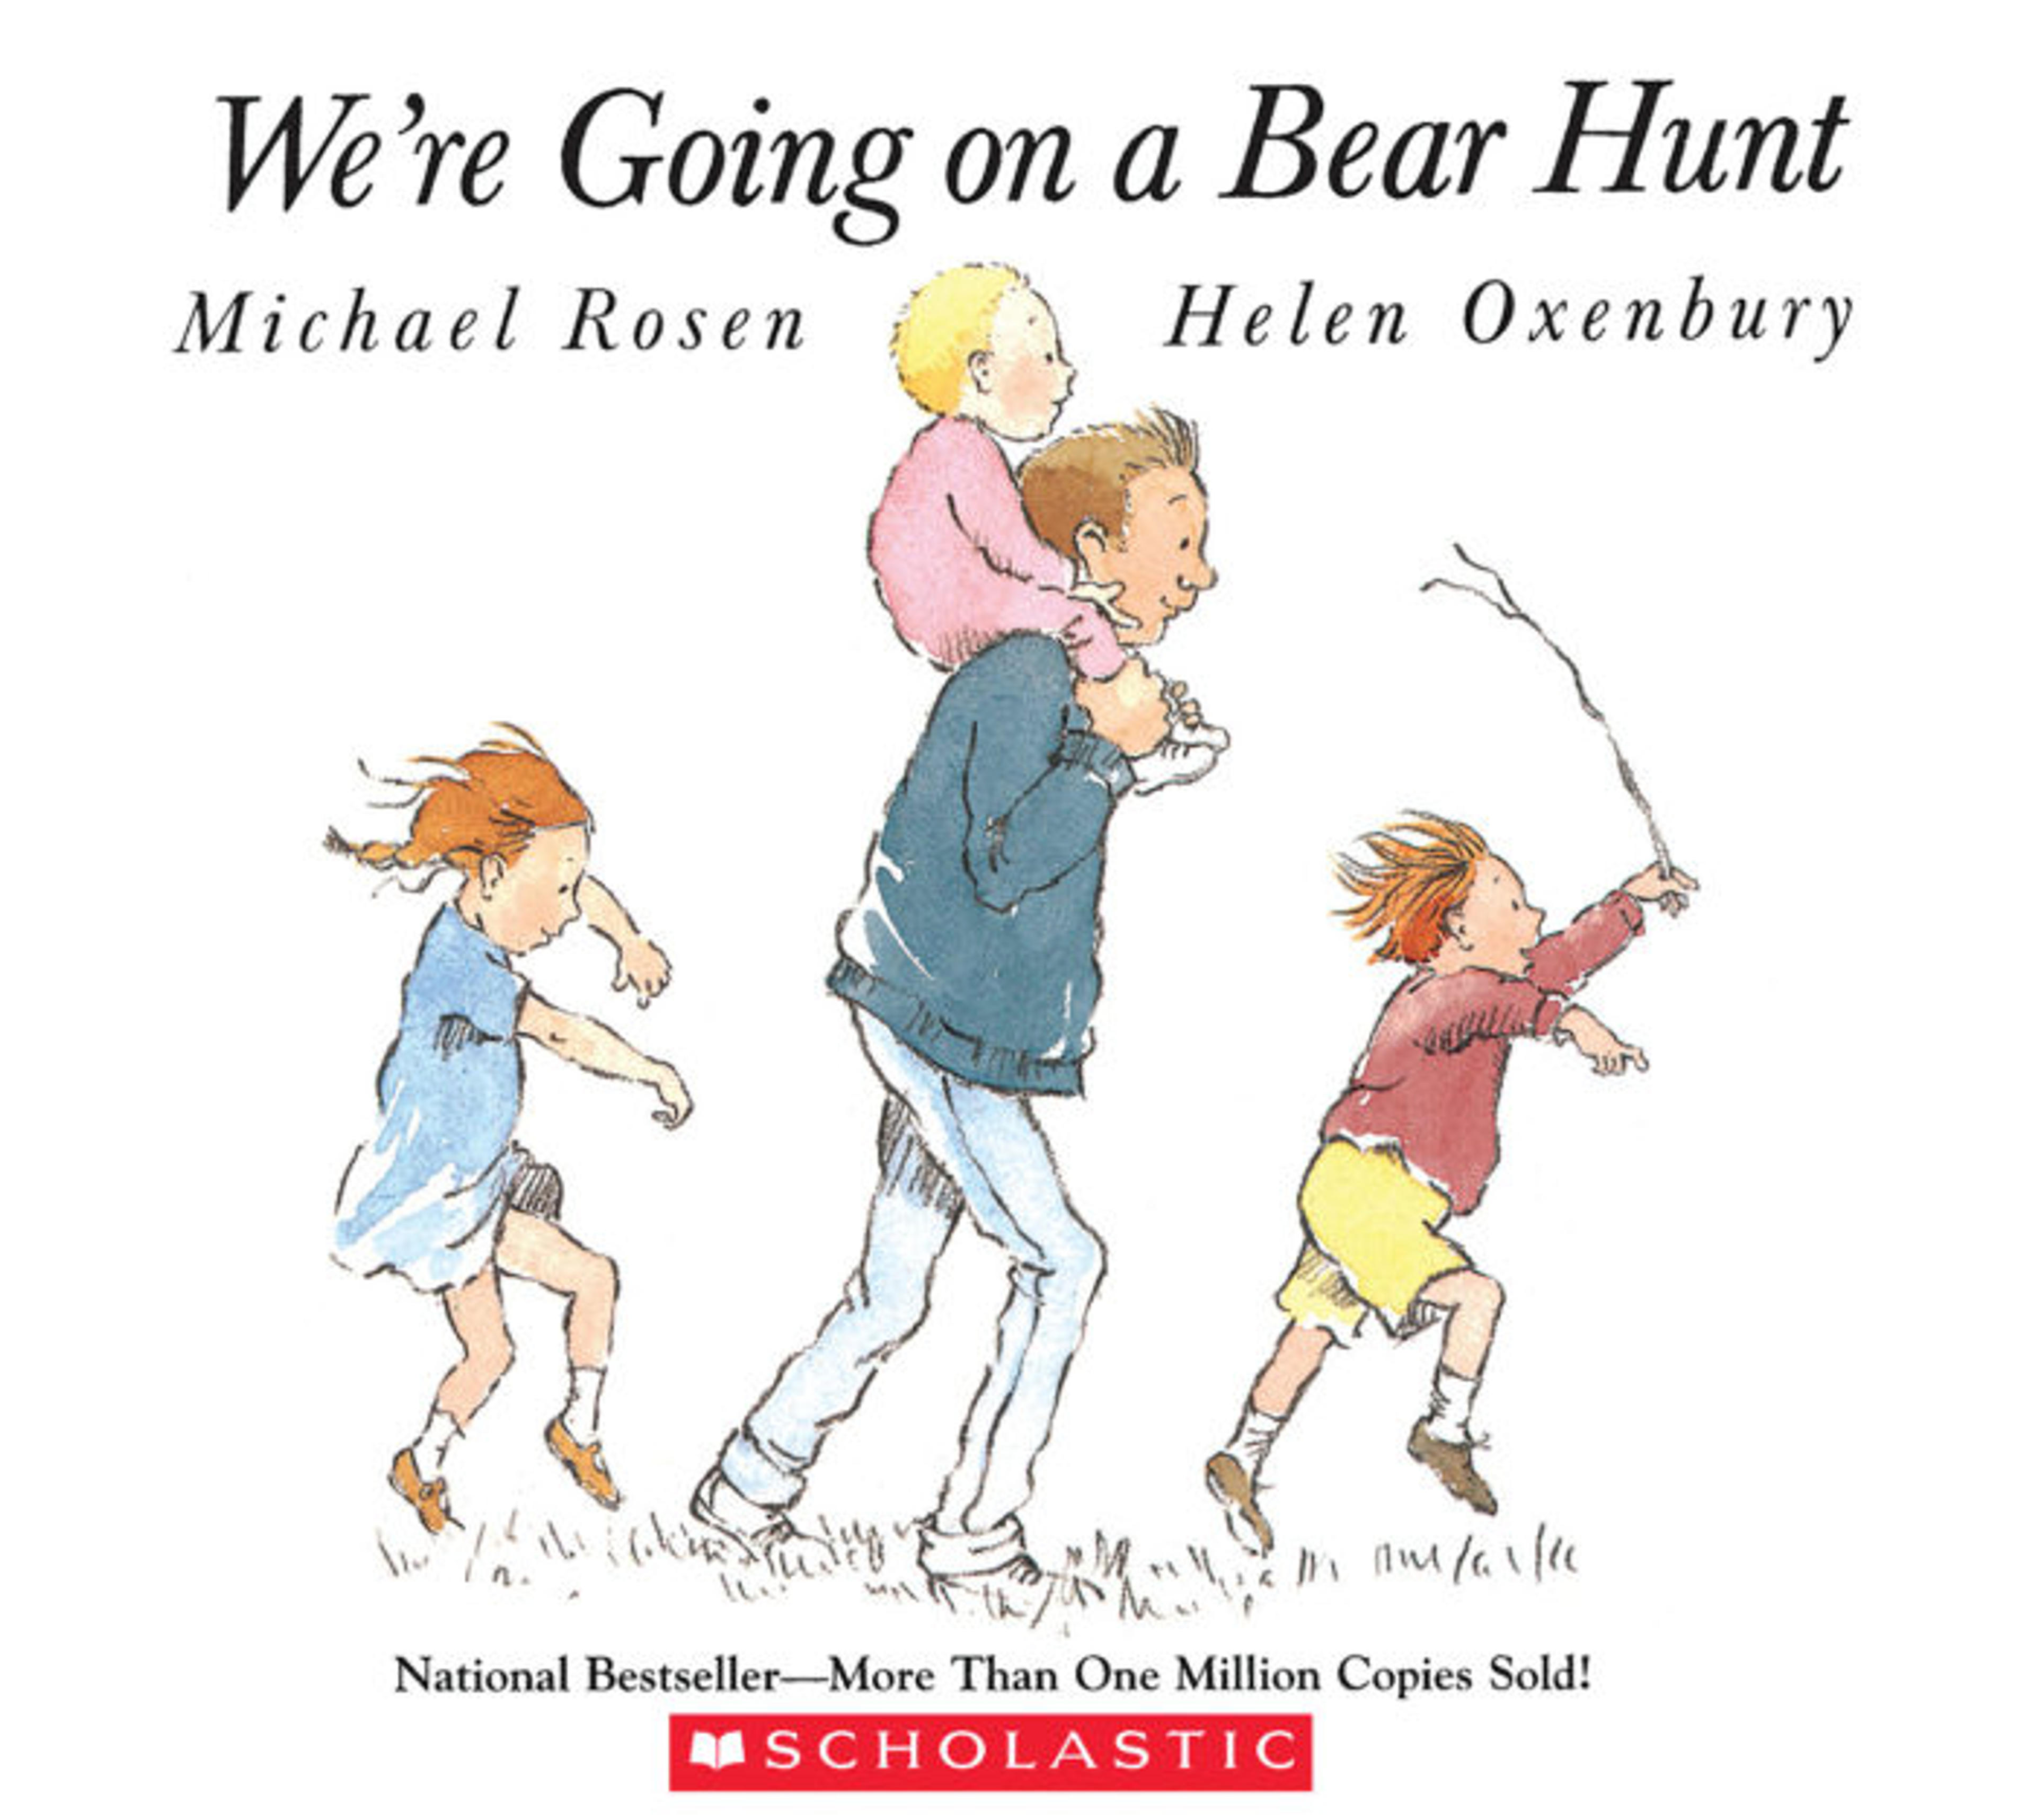 We're Going On a Bear Hunt by Michael J. Rosen